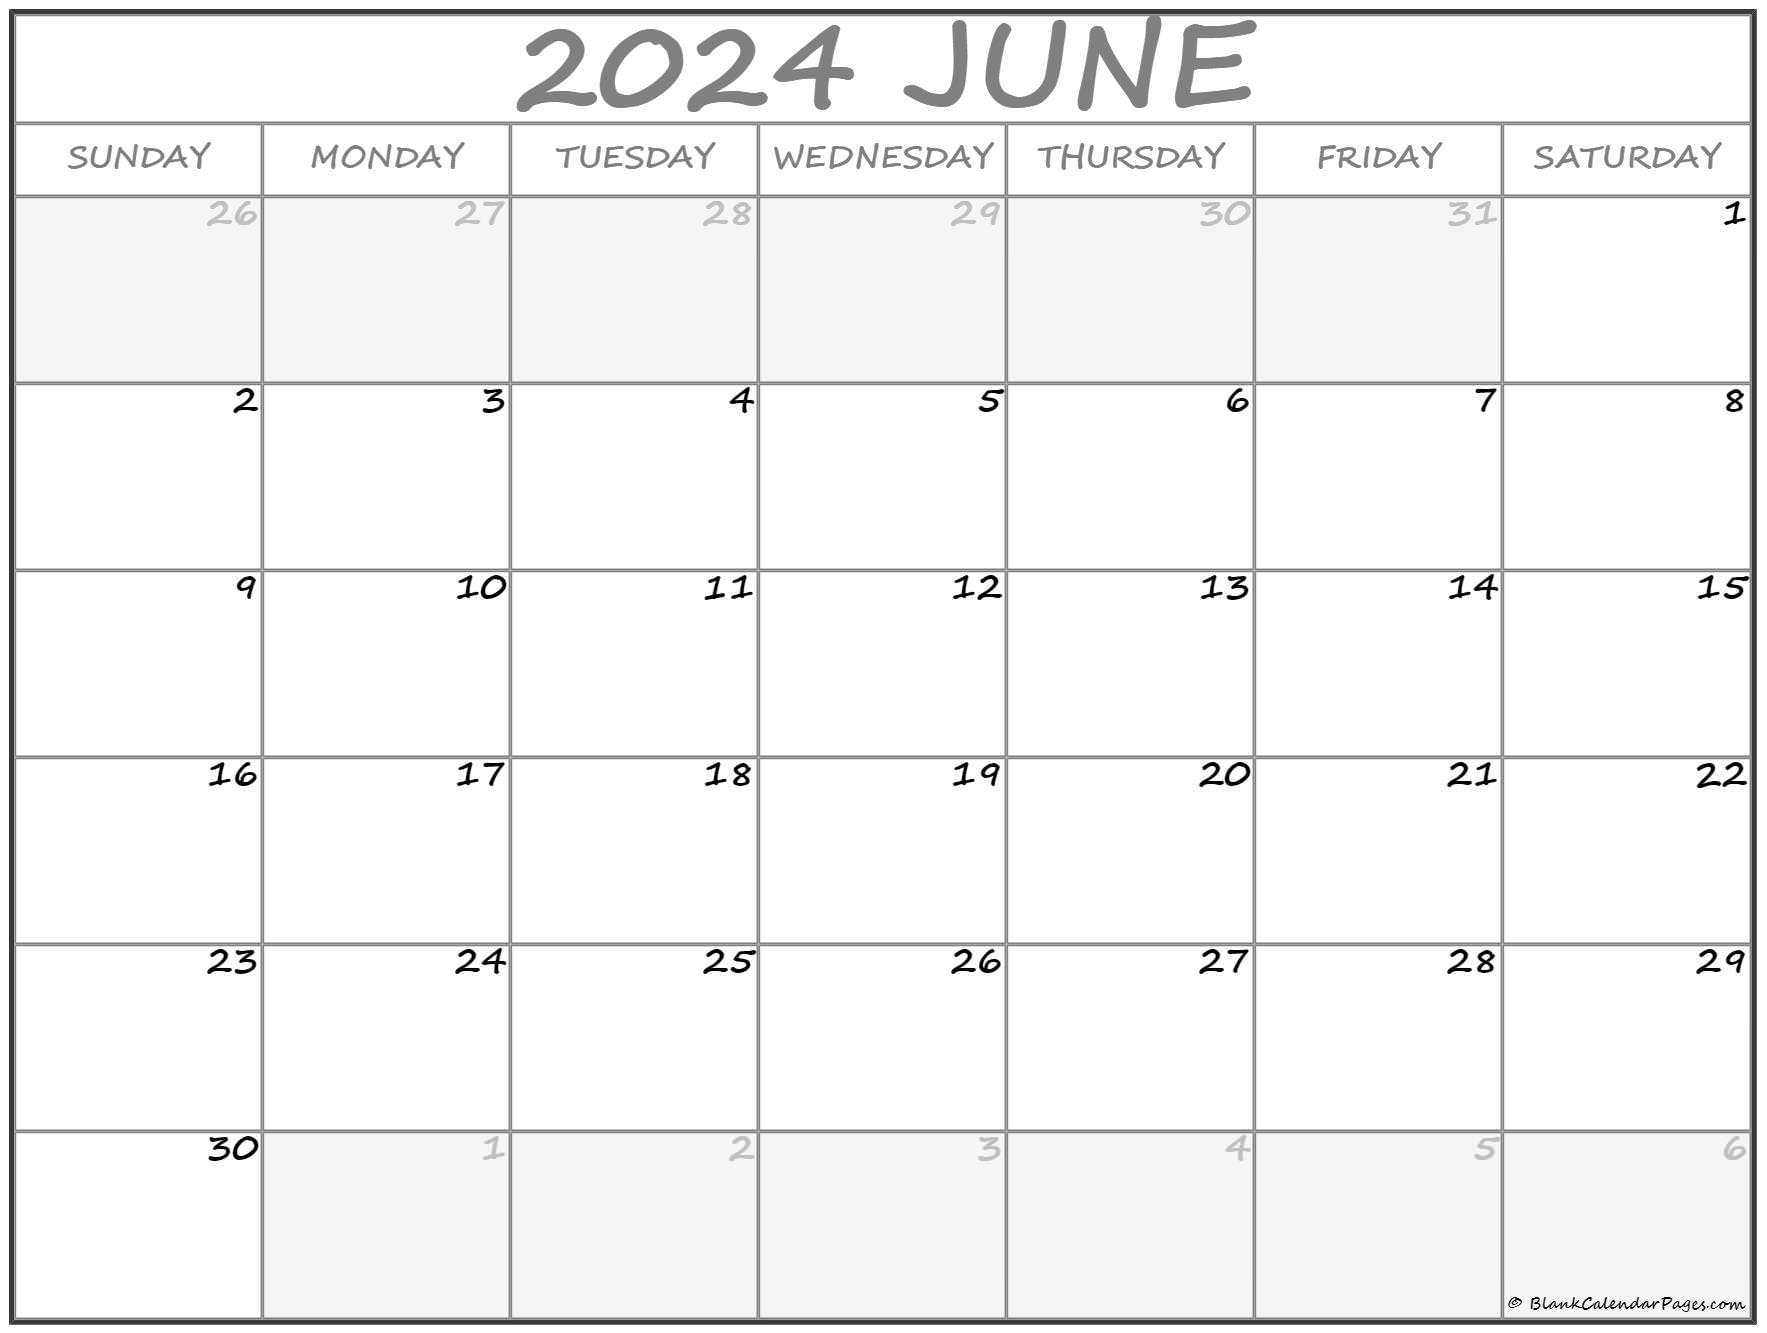 Календарь на 2024 год на телефон. Календарь 2024. Страницы календаря на 2024 году. Американский календарь 2024. Календарь 2024 картинки.